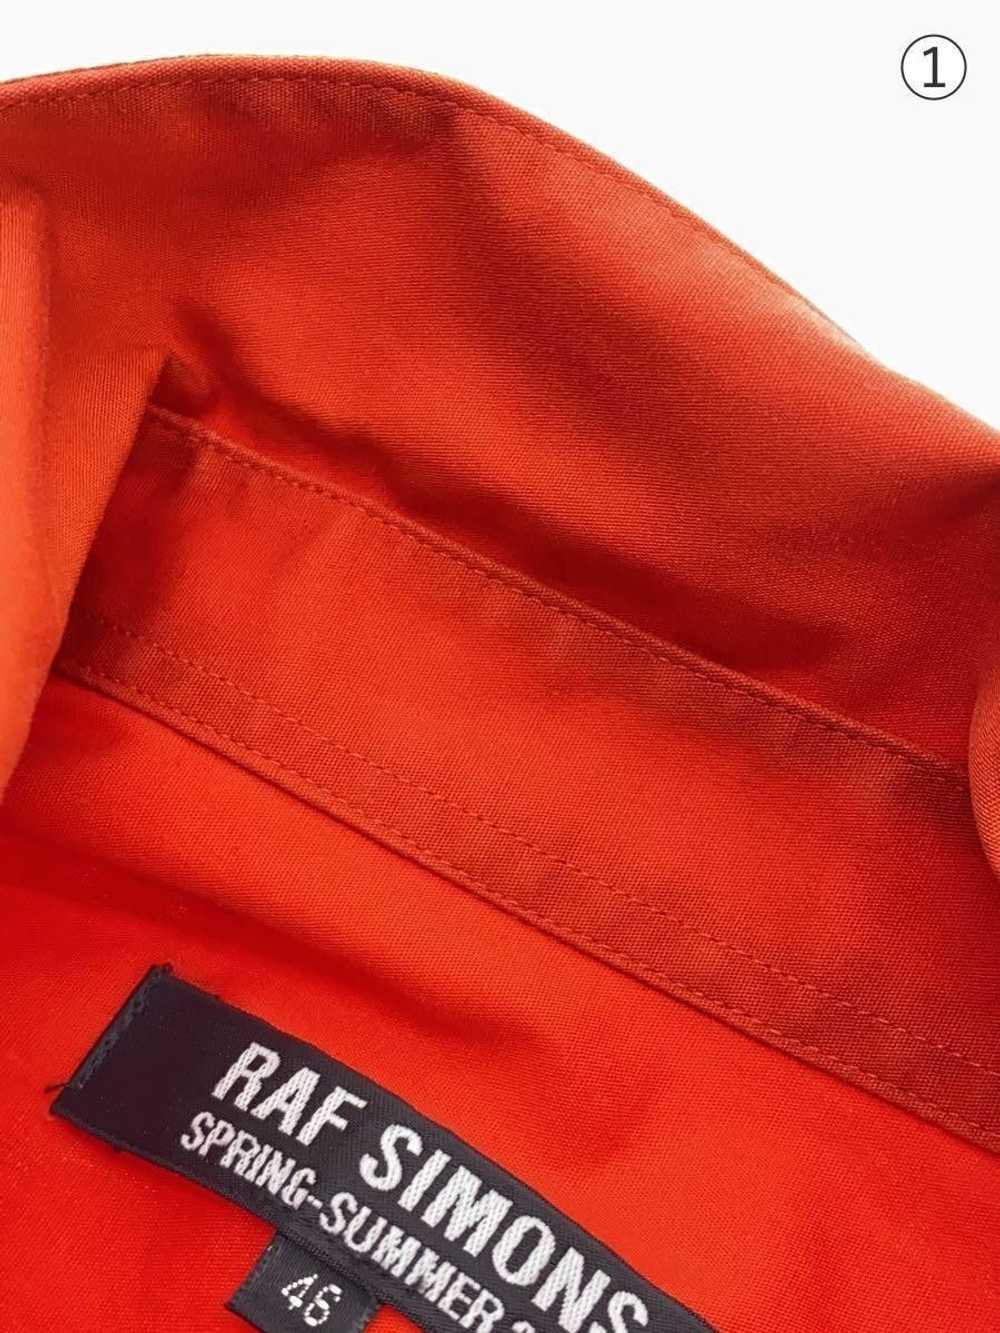 Raf Simons SS07 Short Sleeve Button Shirt - image 4